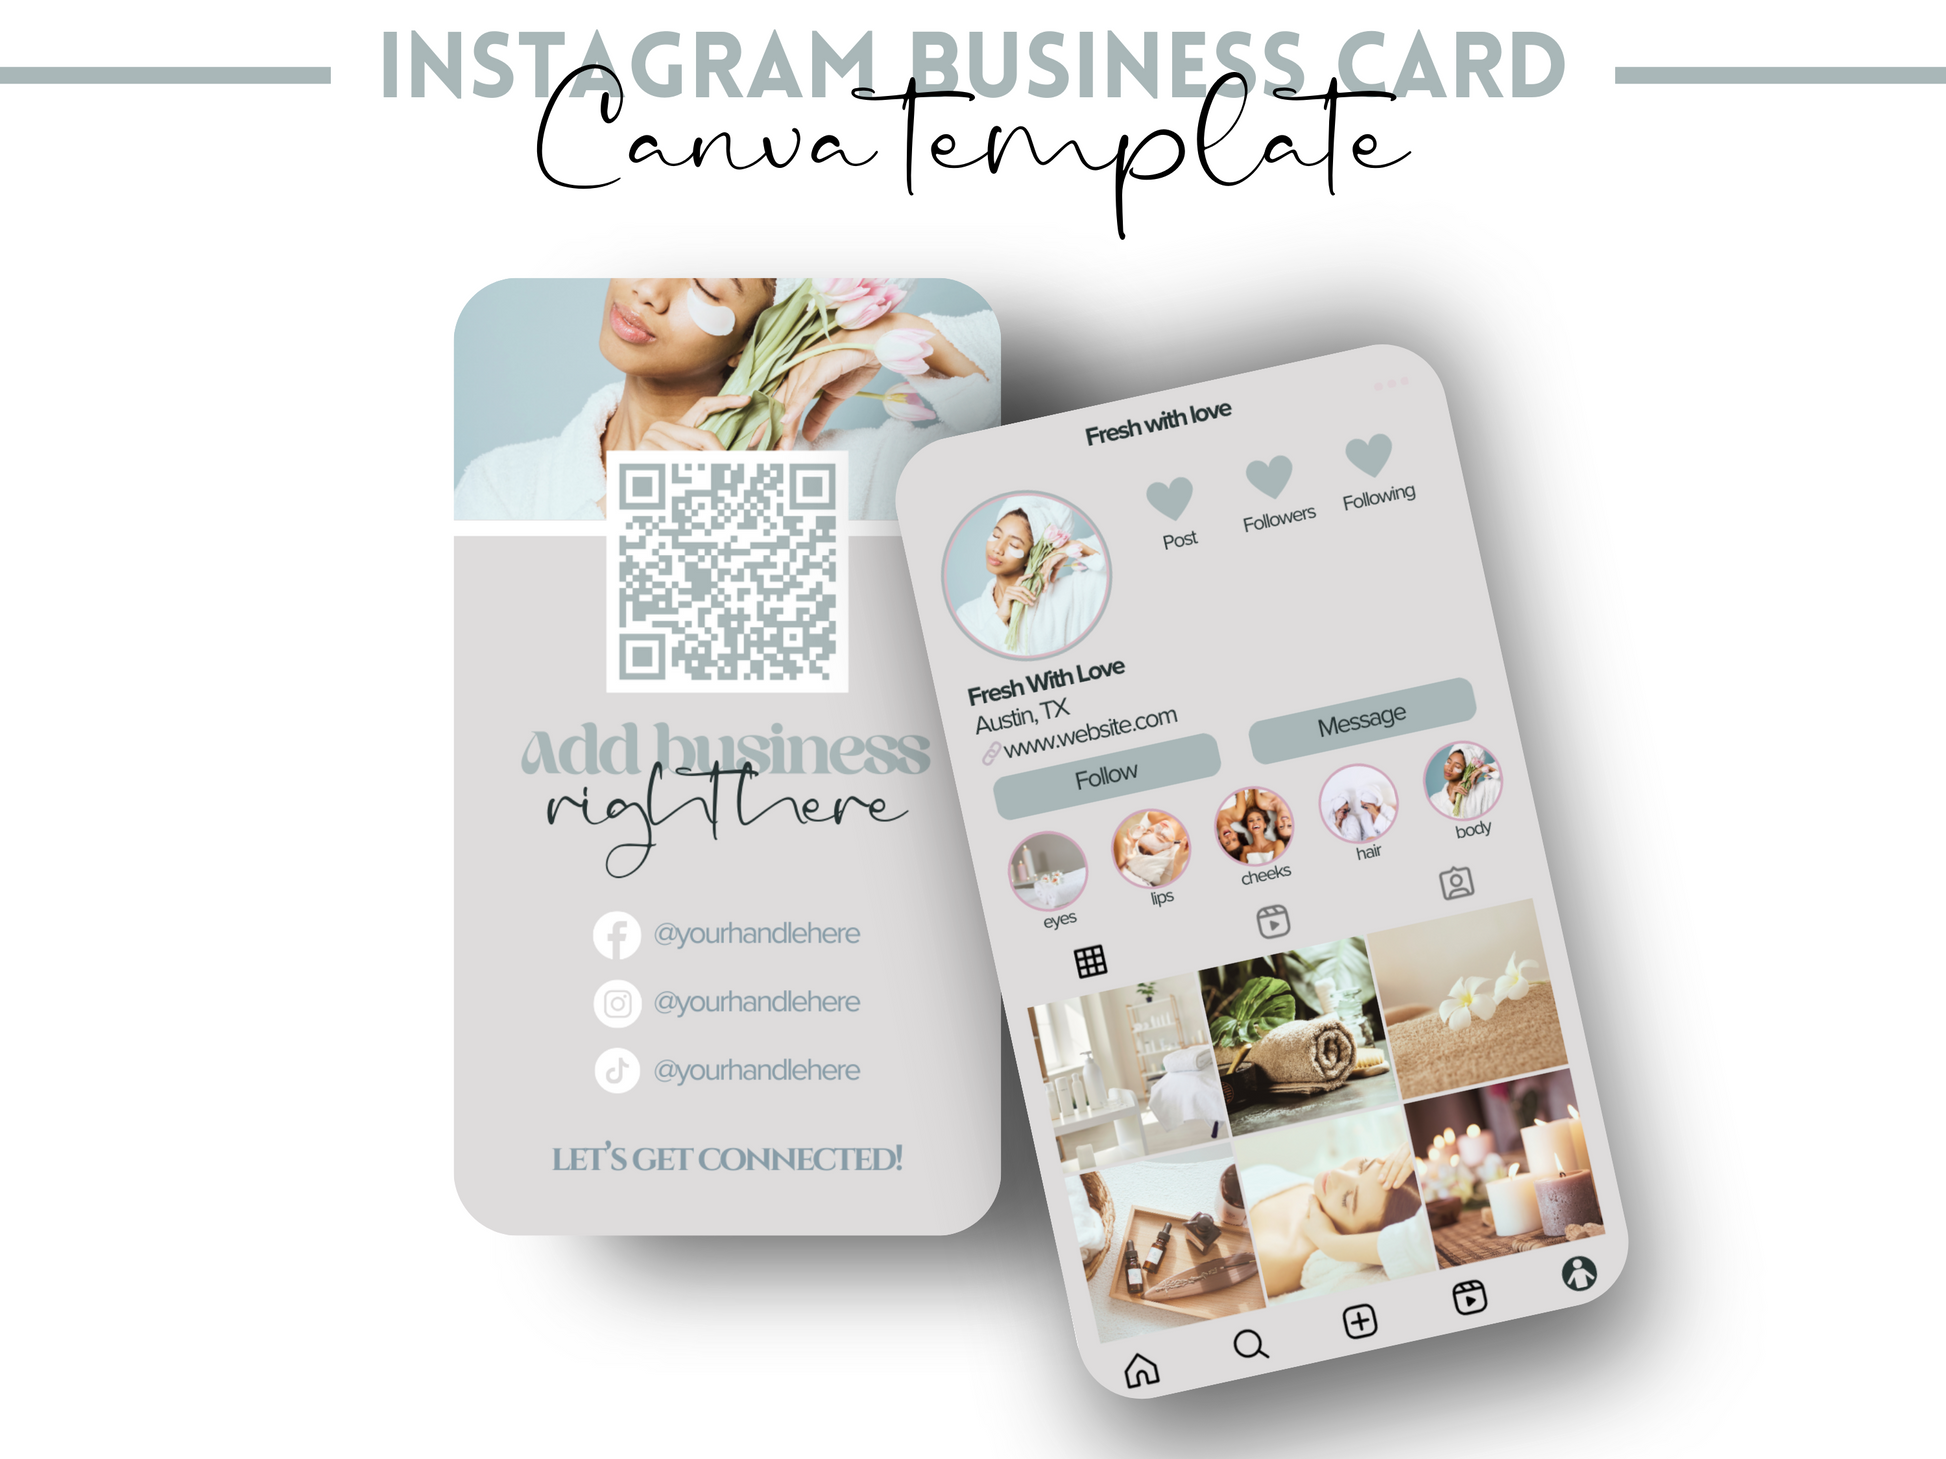 Instagram Business Card, Spa Theme, Influencer Editable Business Card Beauty IG Influencer QR Code Business Card Skincare Template Social Media Card Spring Daisy Digital